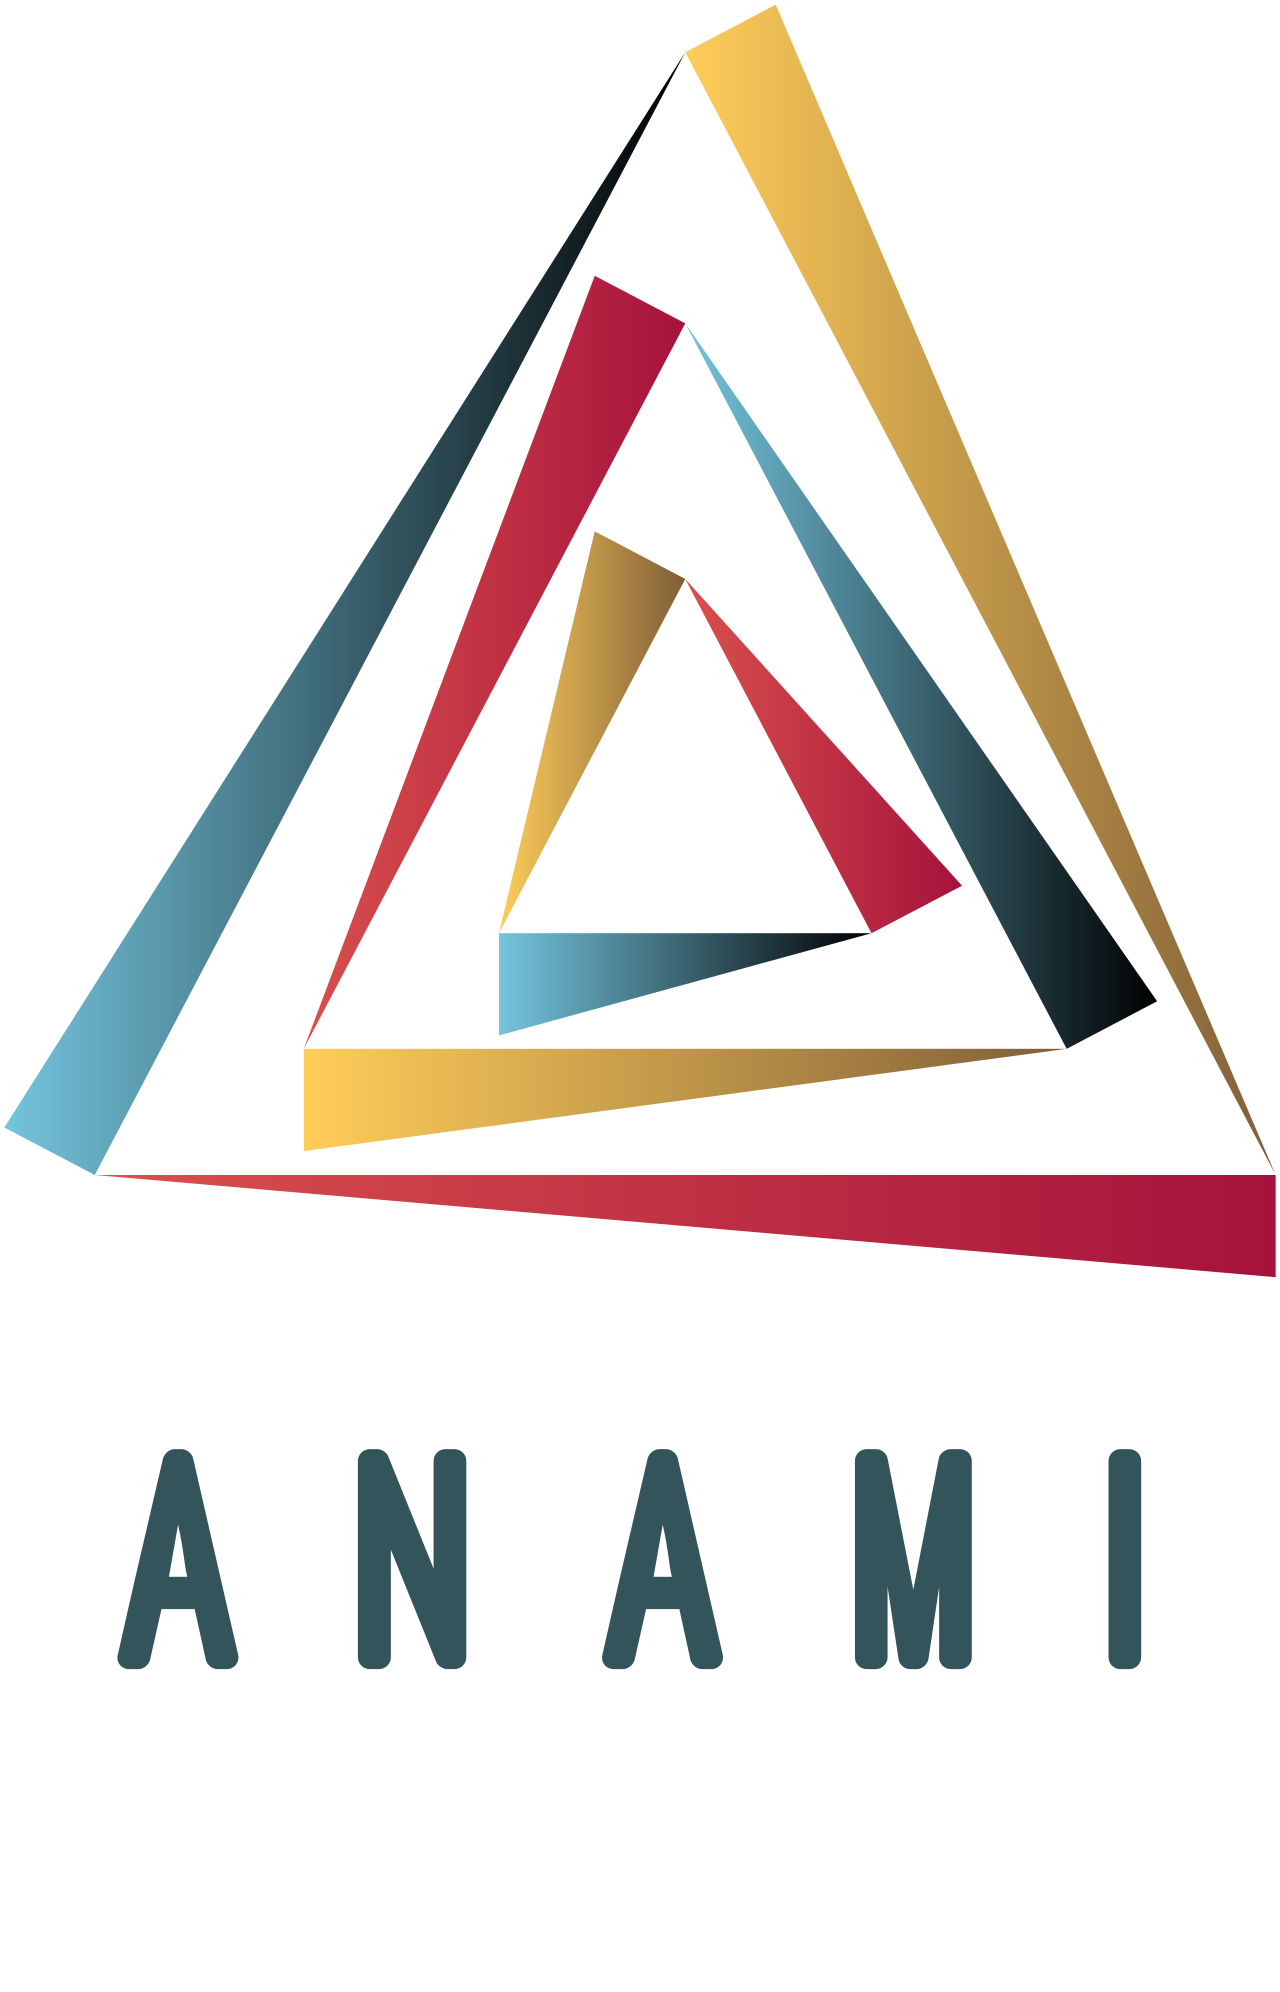 ANAMI's web page